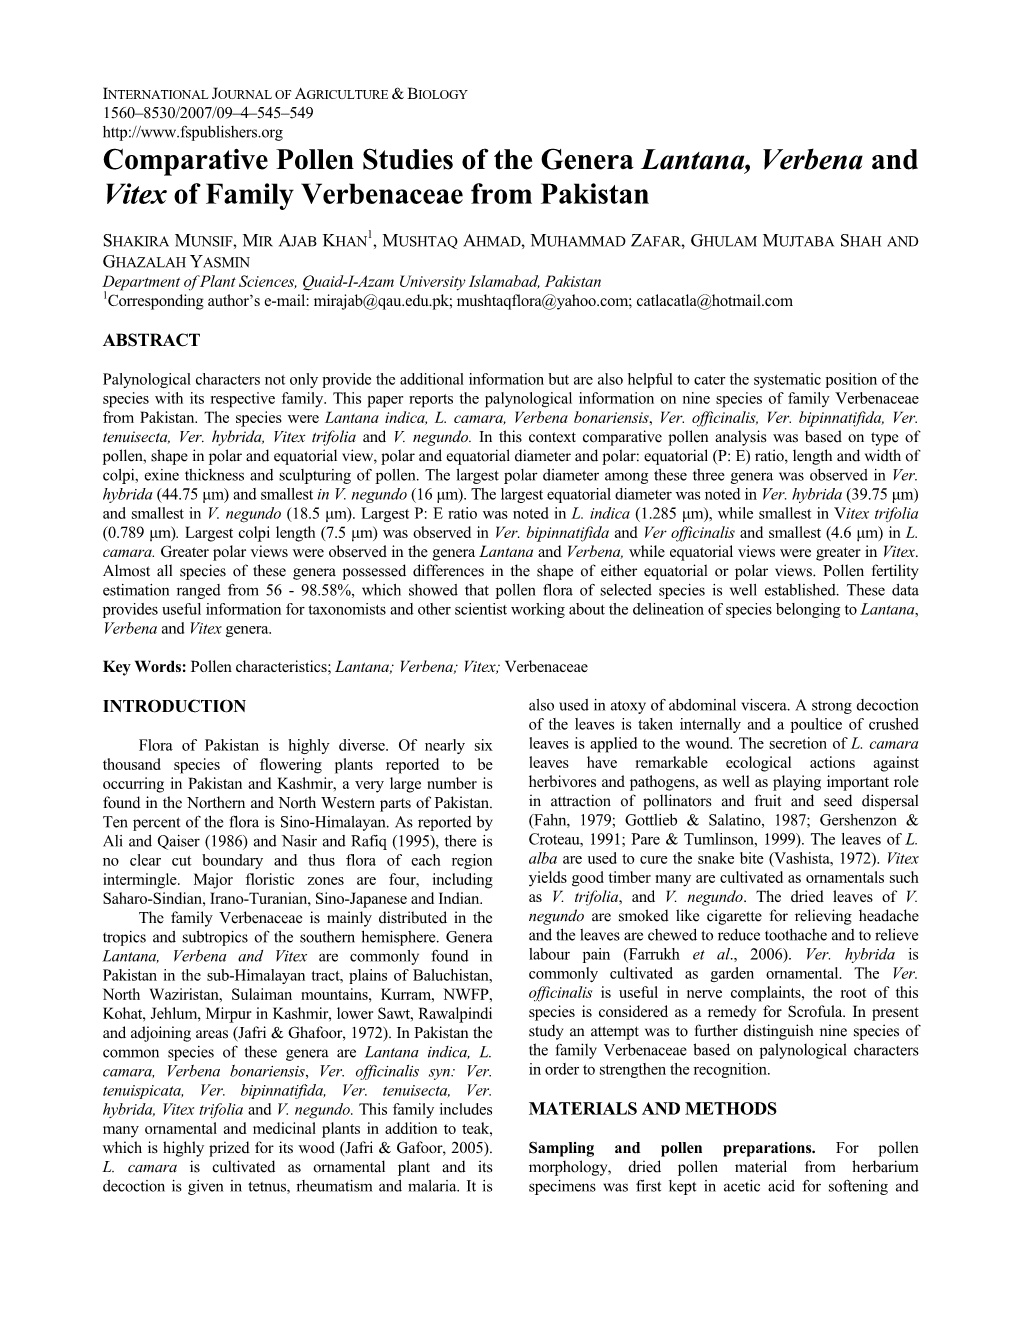 Comparative Pollen Studies of the Genera Lantana, Verbena and Vitex of Family Verbenaceae from Pakistan